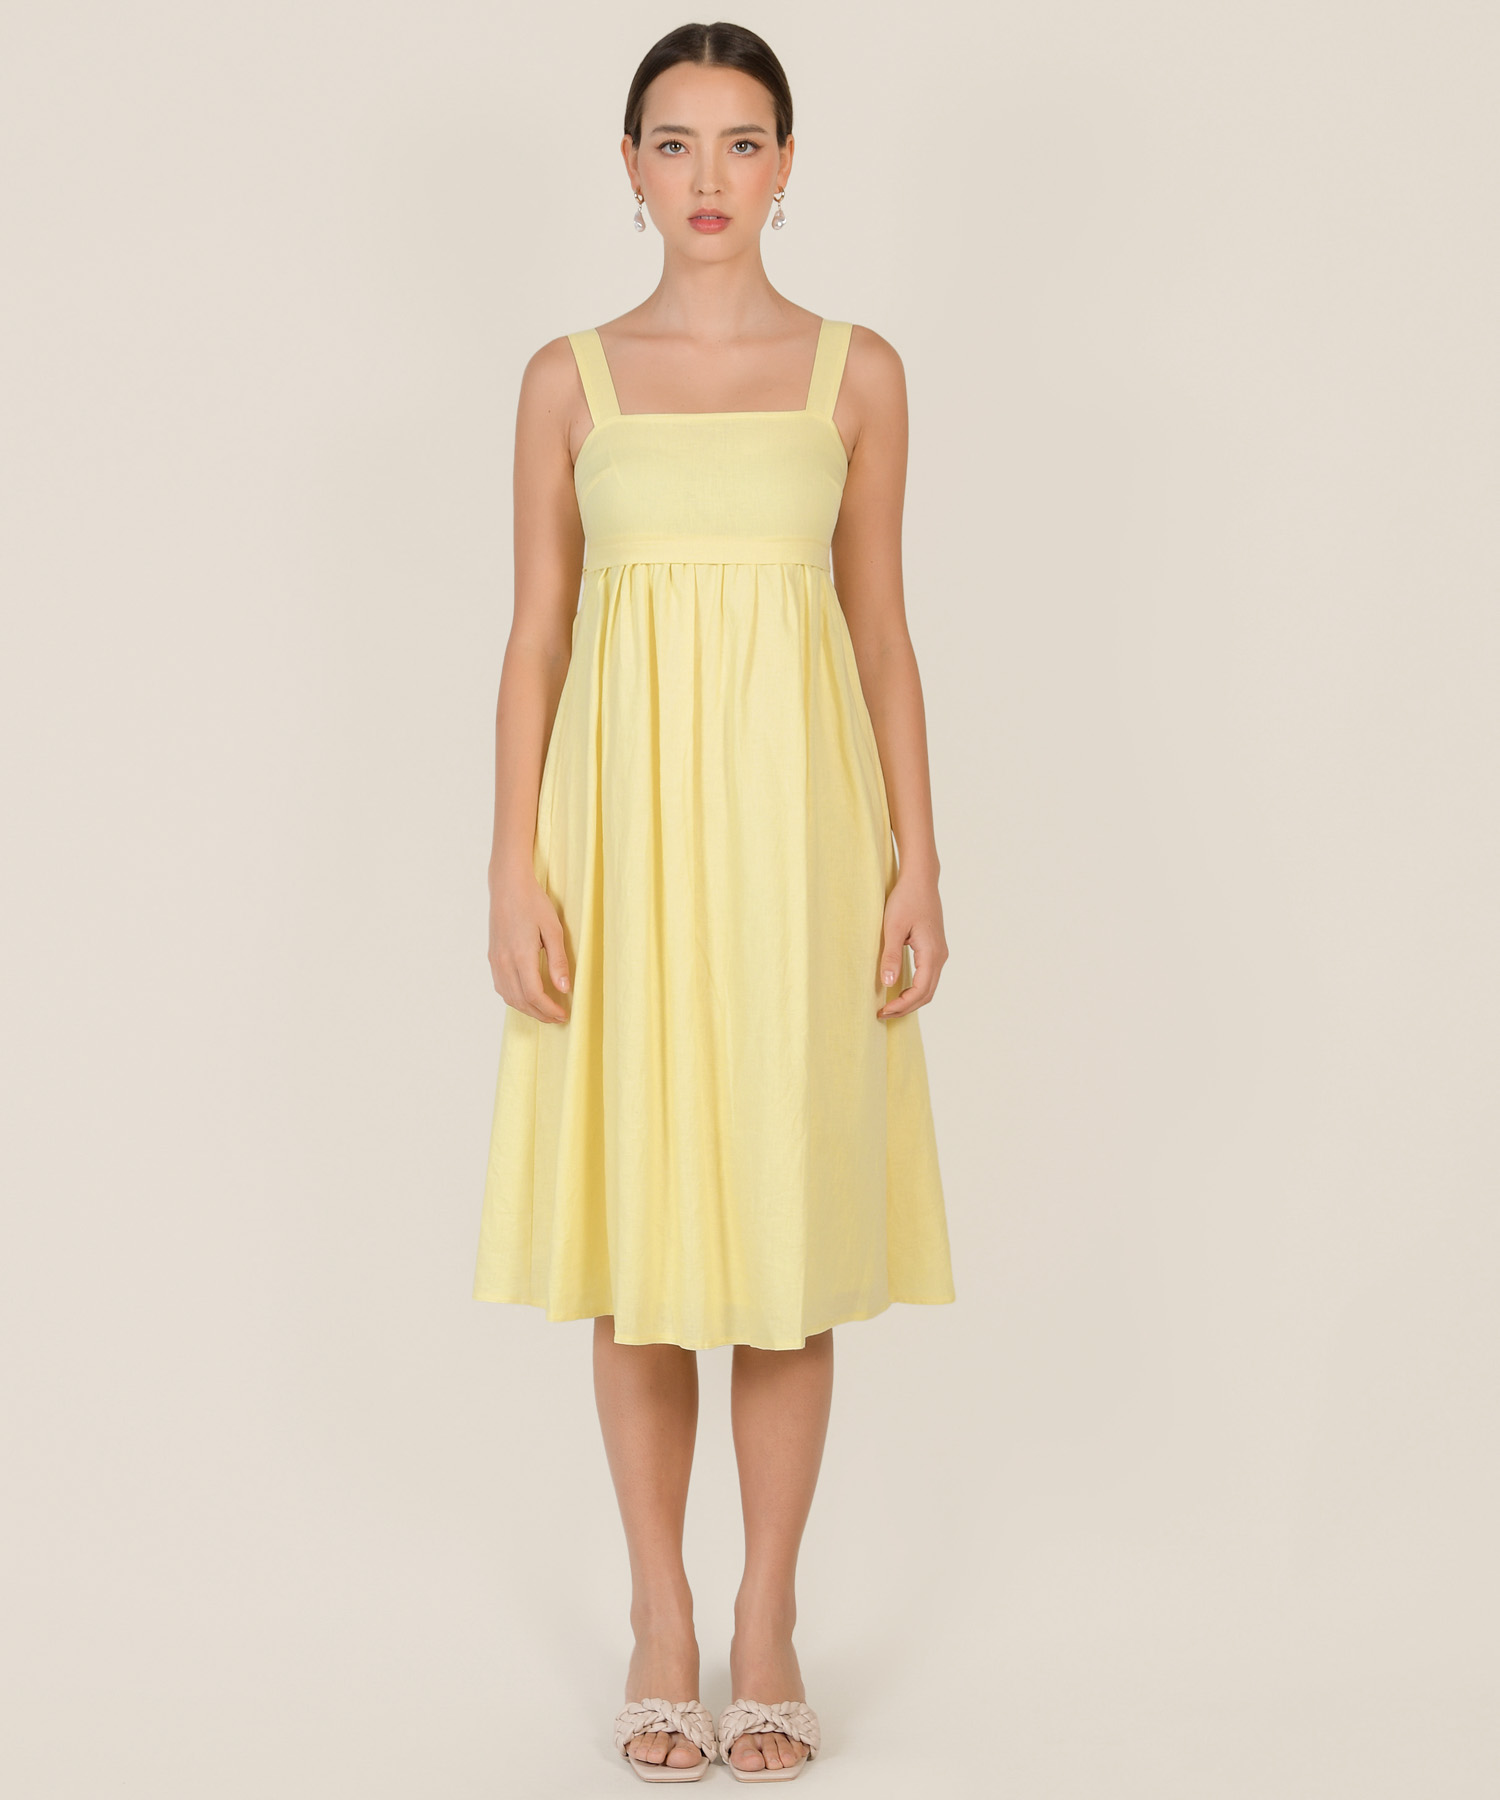 Rivulet Tie Back Tent Midi Dress in Yellow Women's Clothing Online